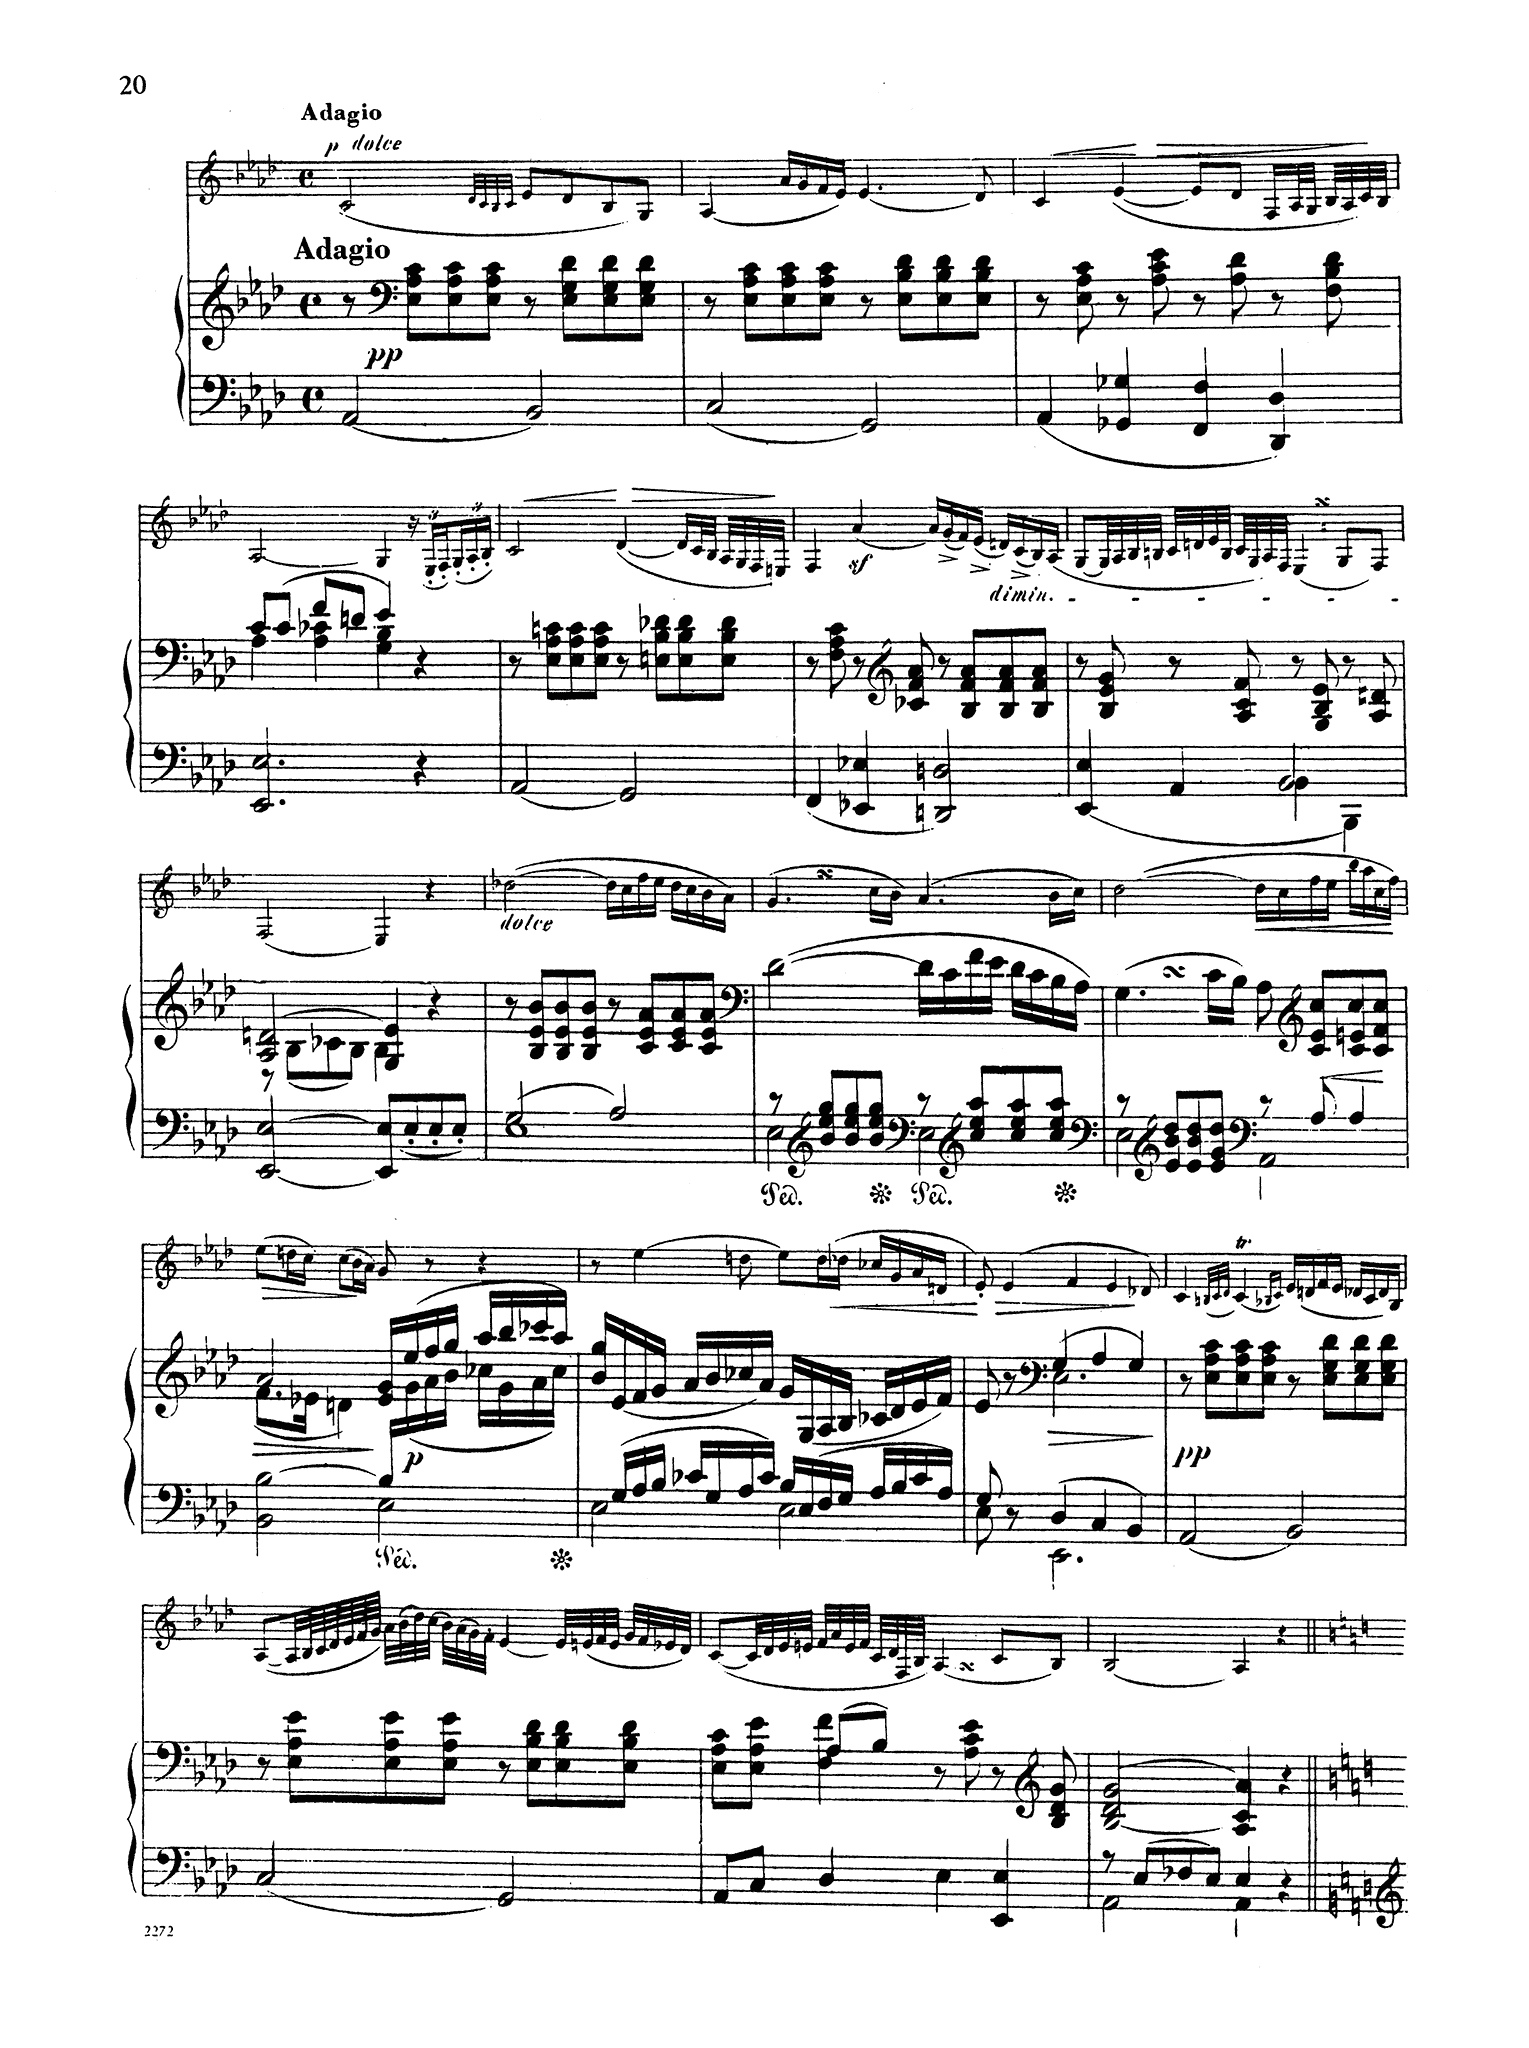 Clarinet Concerto No. 2 in E-flat Major, Op. 57 - Movement 2